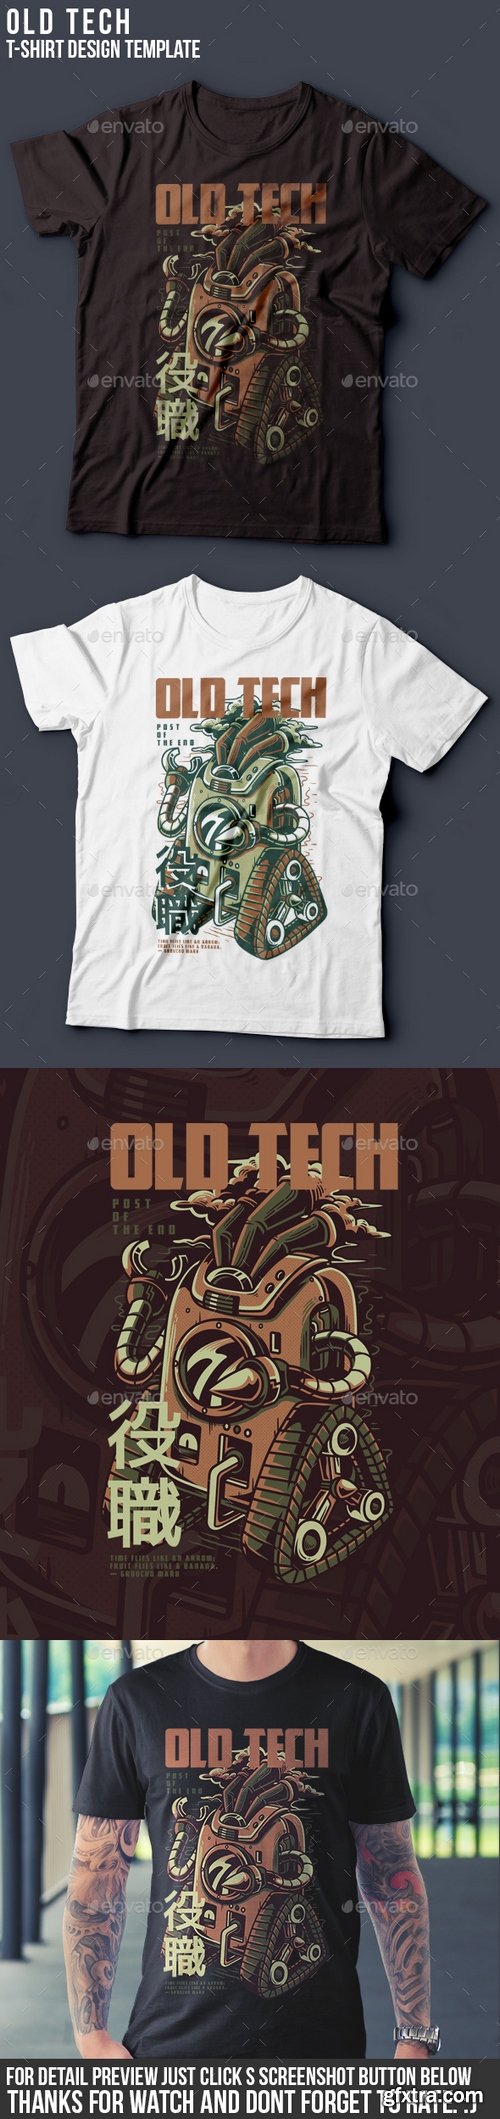 Graphicriver - Old Tech T-Shirt Design 22061835